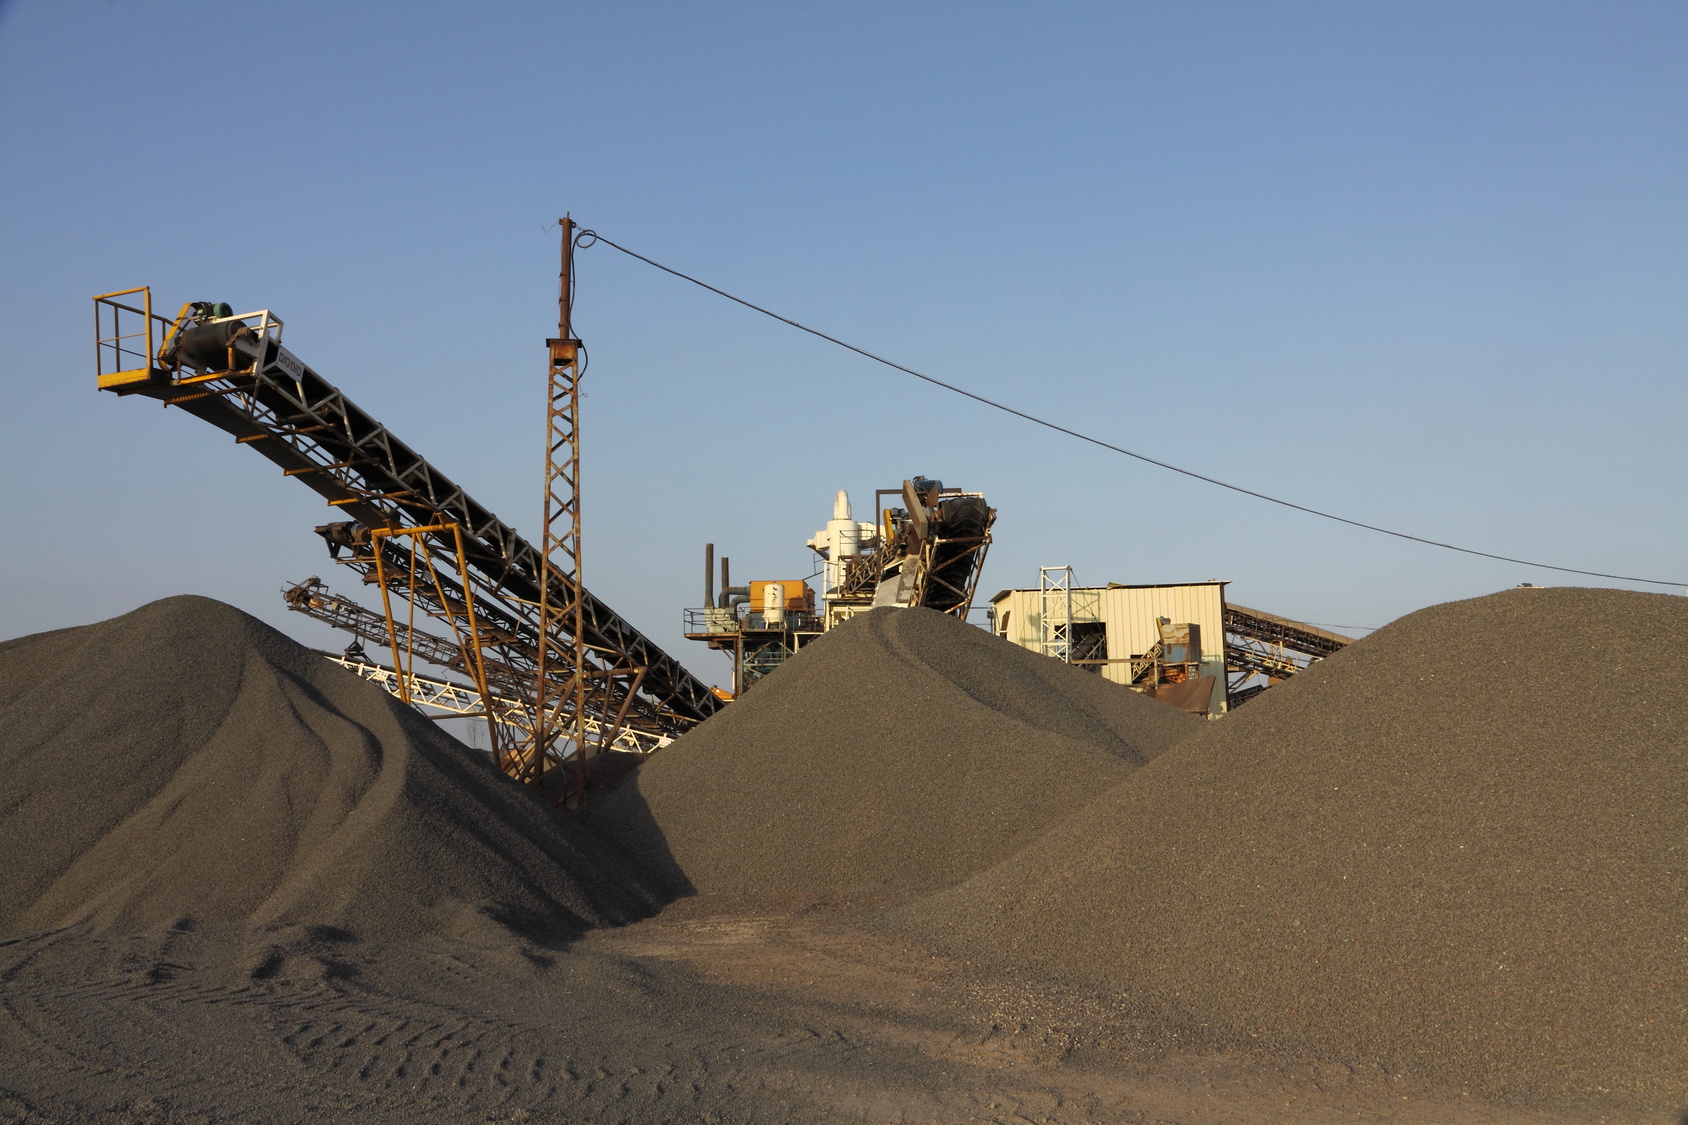 conveyor belt in the brown coal mining area of the lower rhine